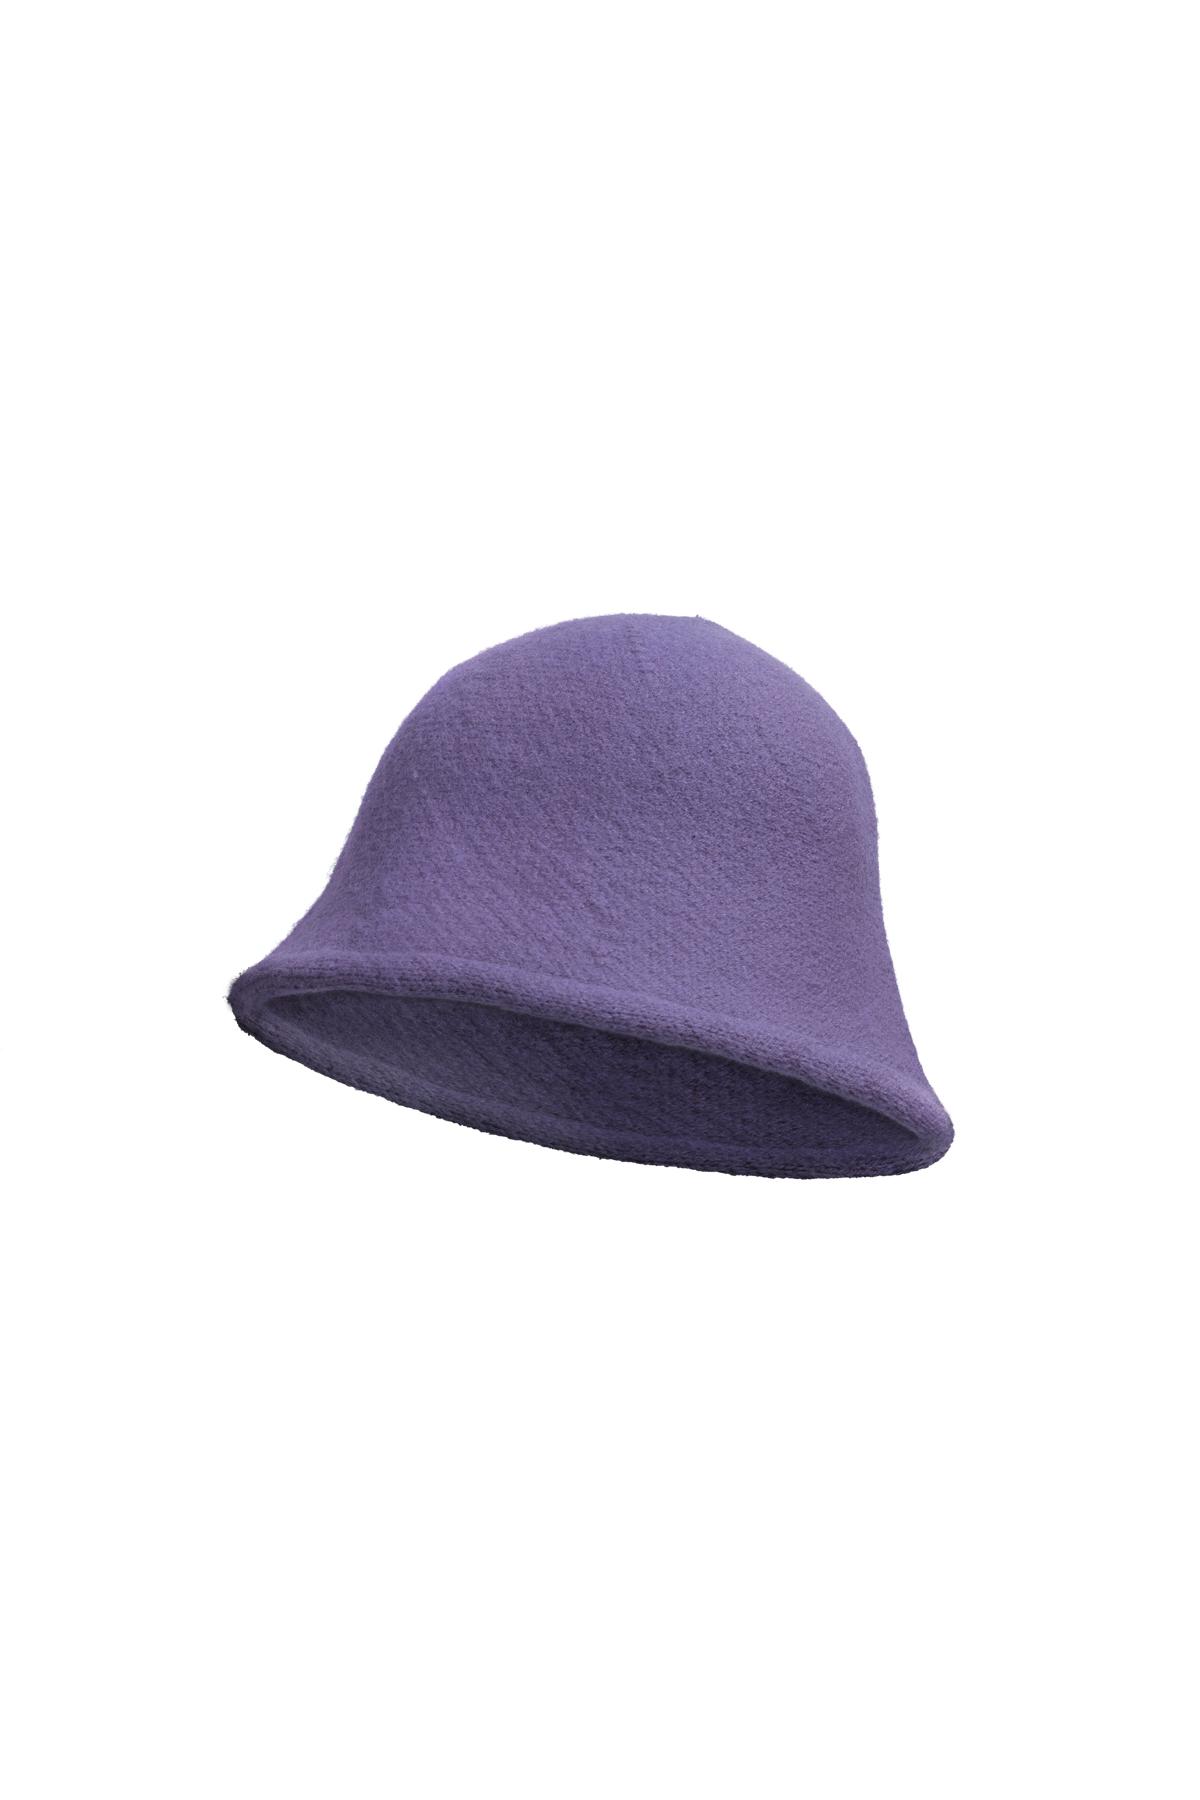 Kova şapka düz renk Purple Acrylic 